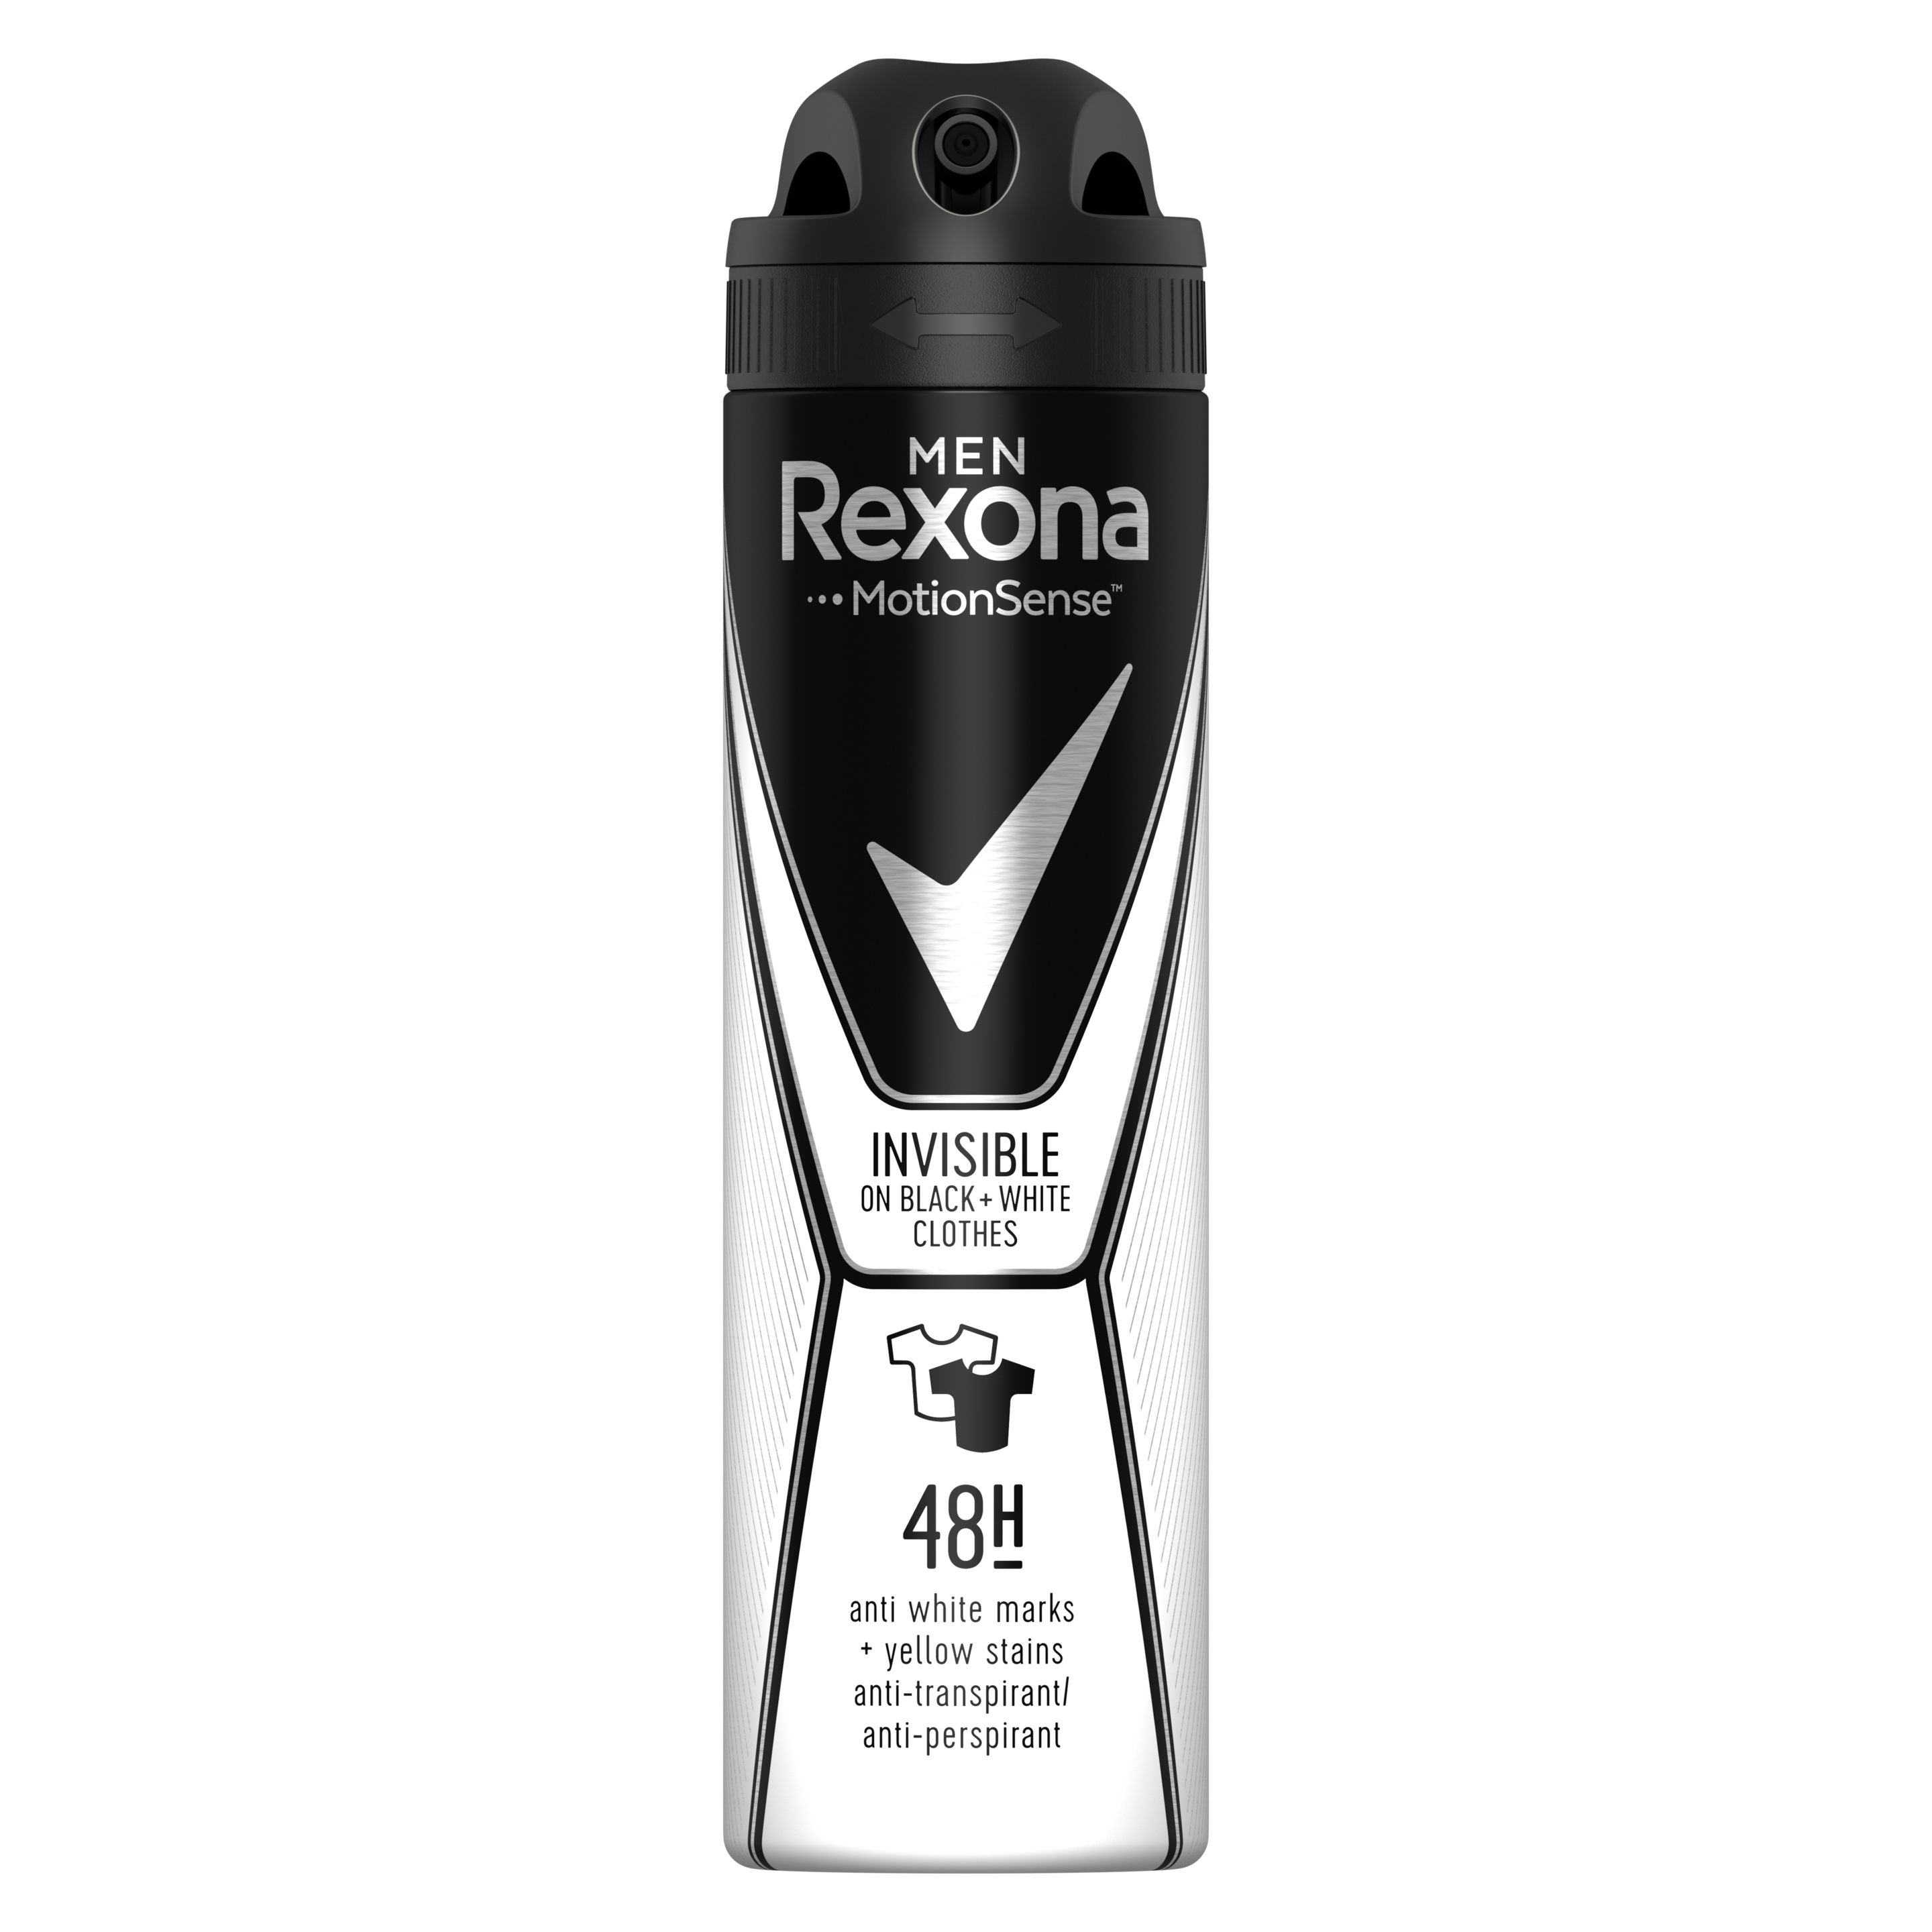 Rexona Invisible on black+white clothes antiperspirant